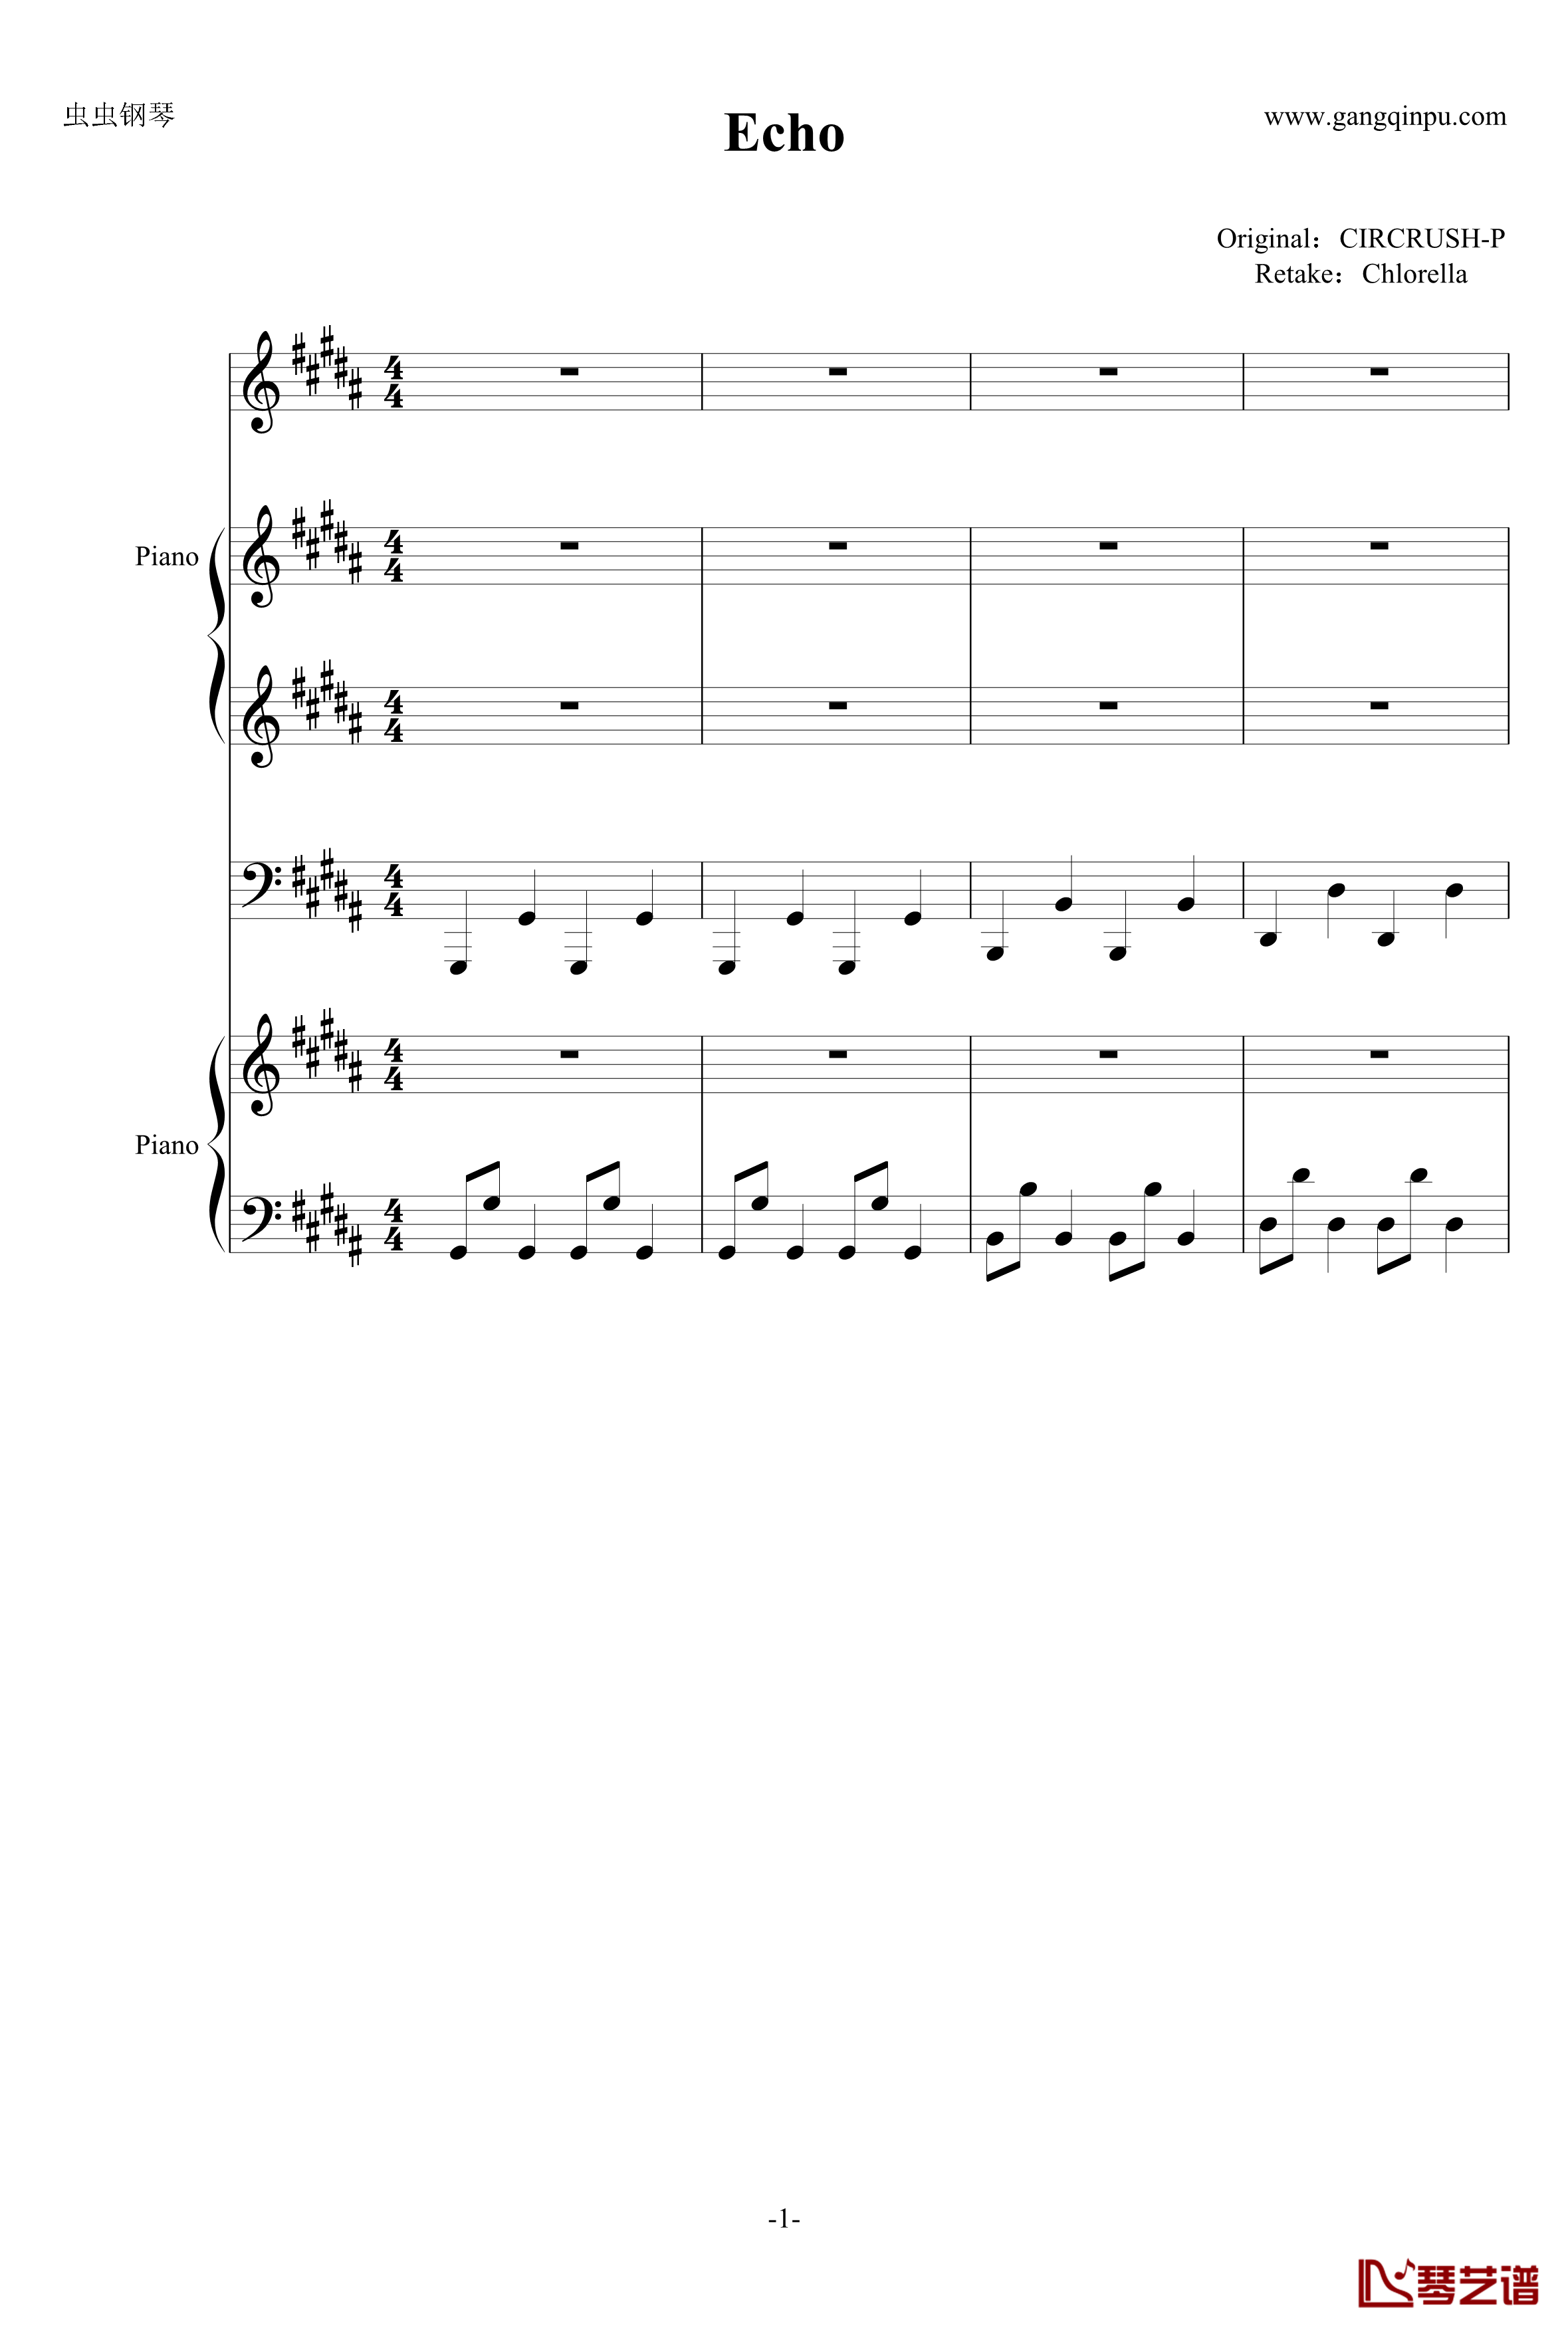 Echo钢琴谱-by CIRCRUSH-P-Chlo.-gumi vocaloid echo1